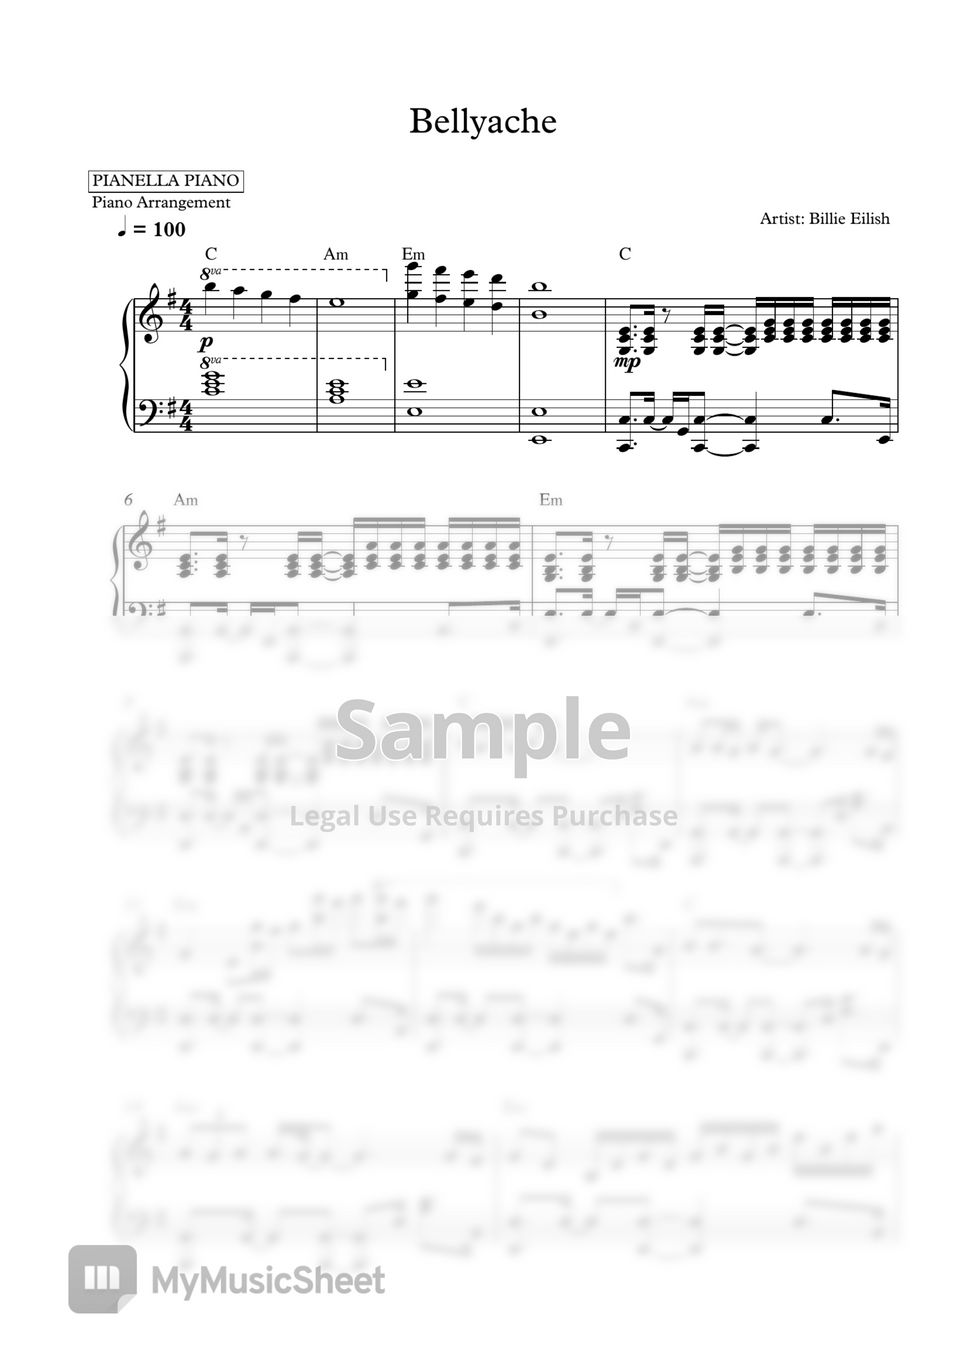 Billie Eilish - Bellyache (Piano Sheet) by Pianella Piano